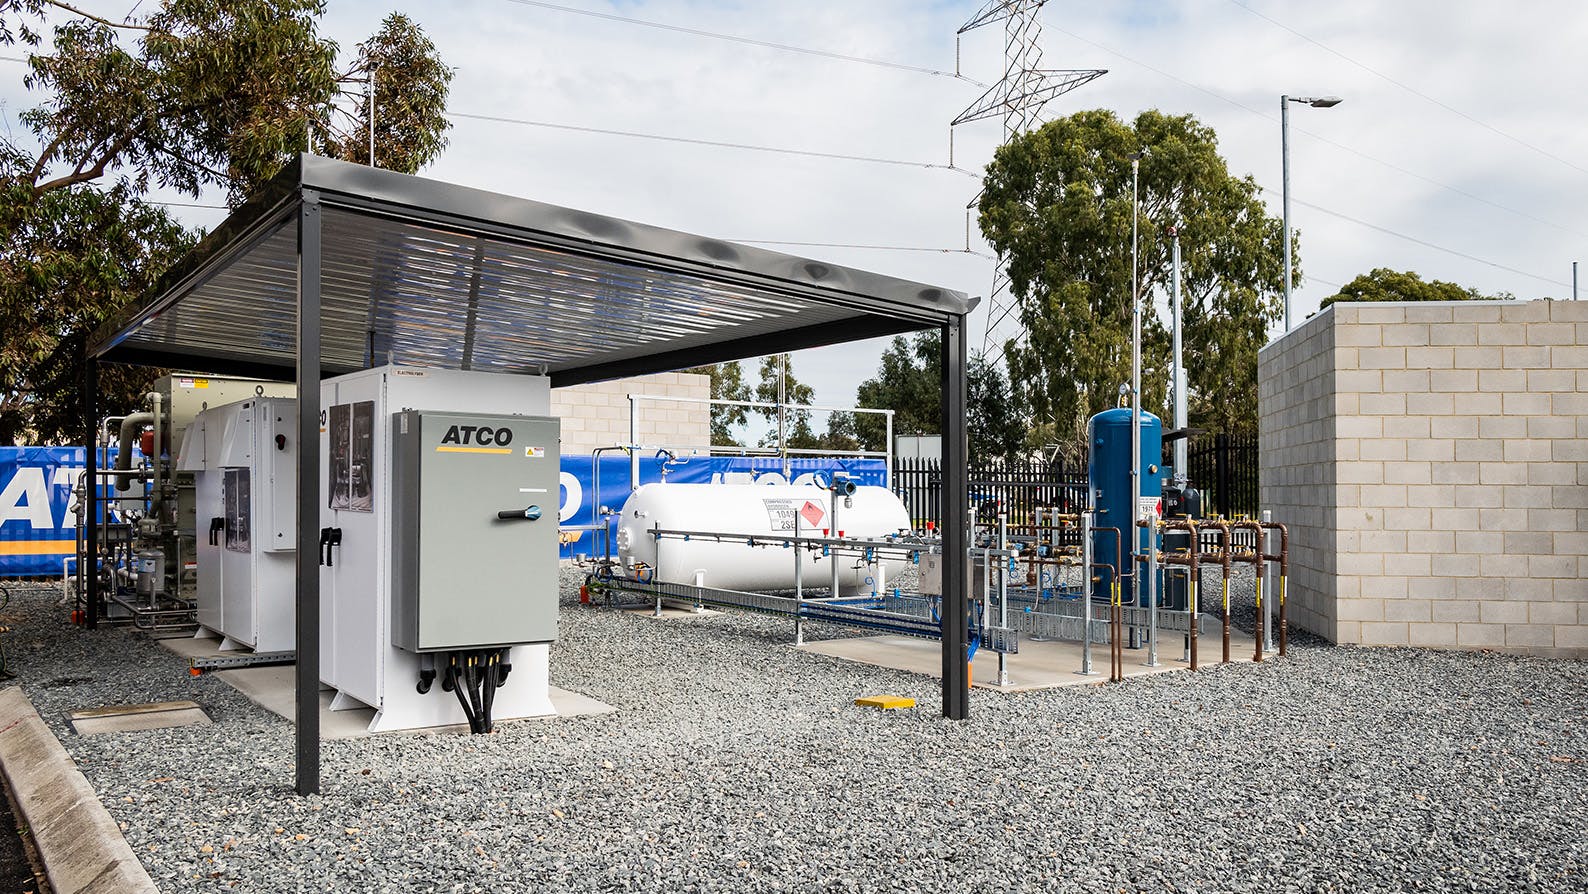 ATCO's Clean Energy Innovation Hub